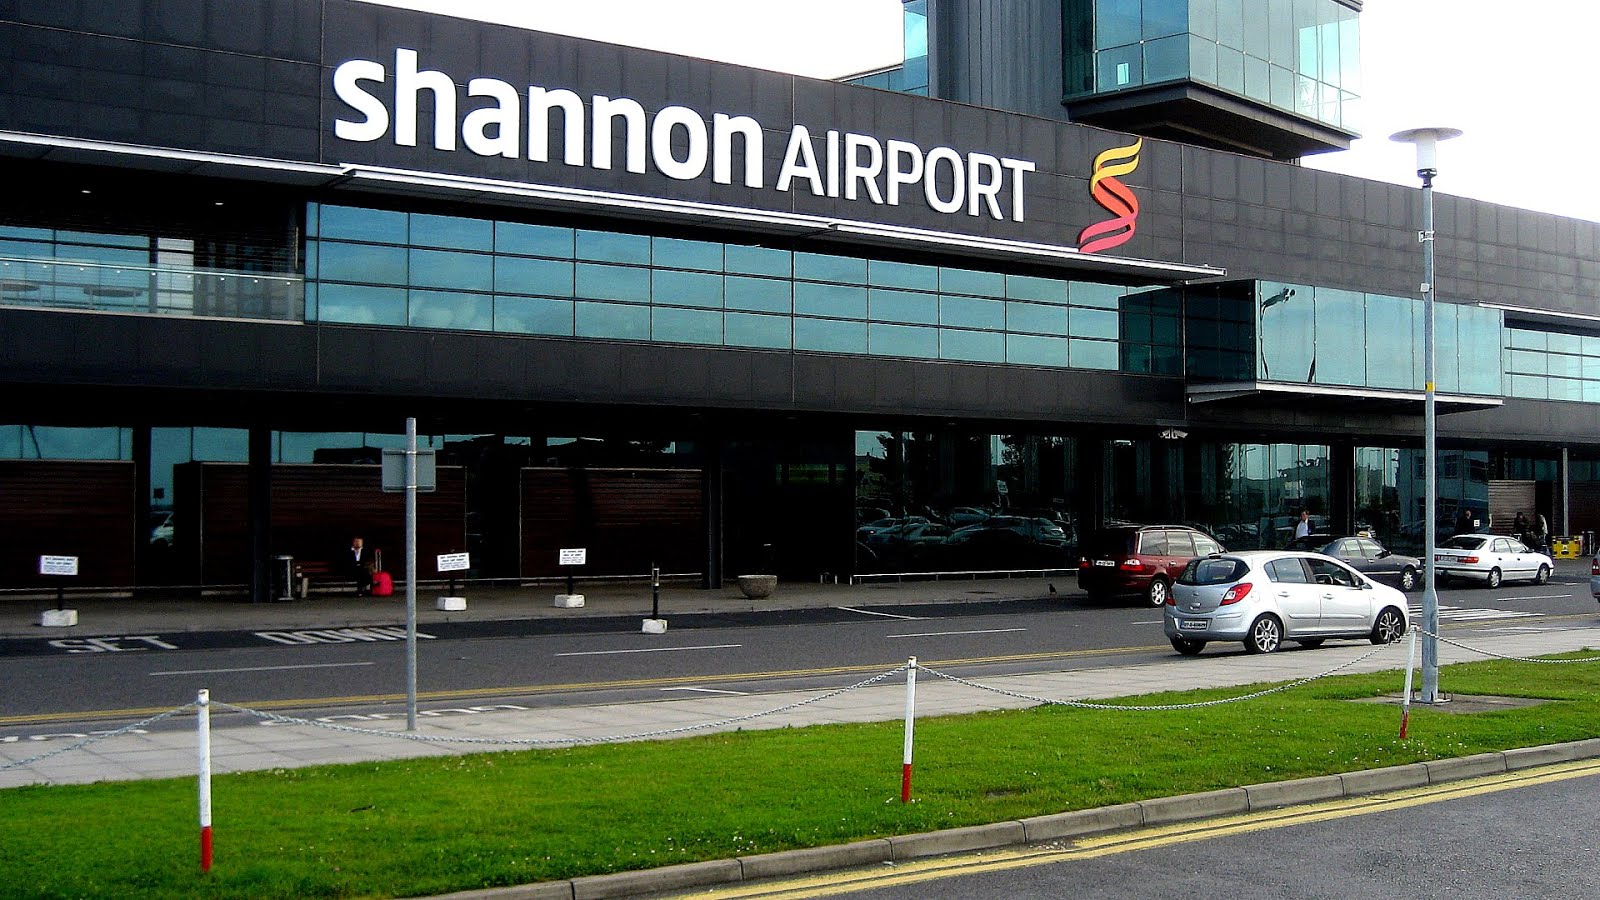 car hire ireland shannon airport